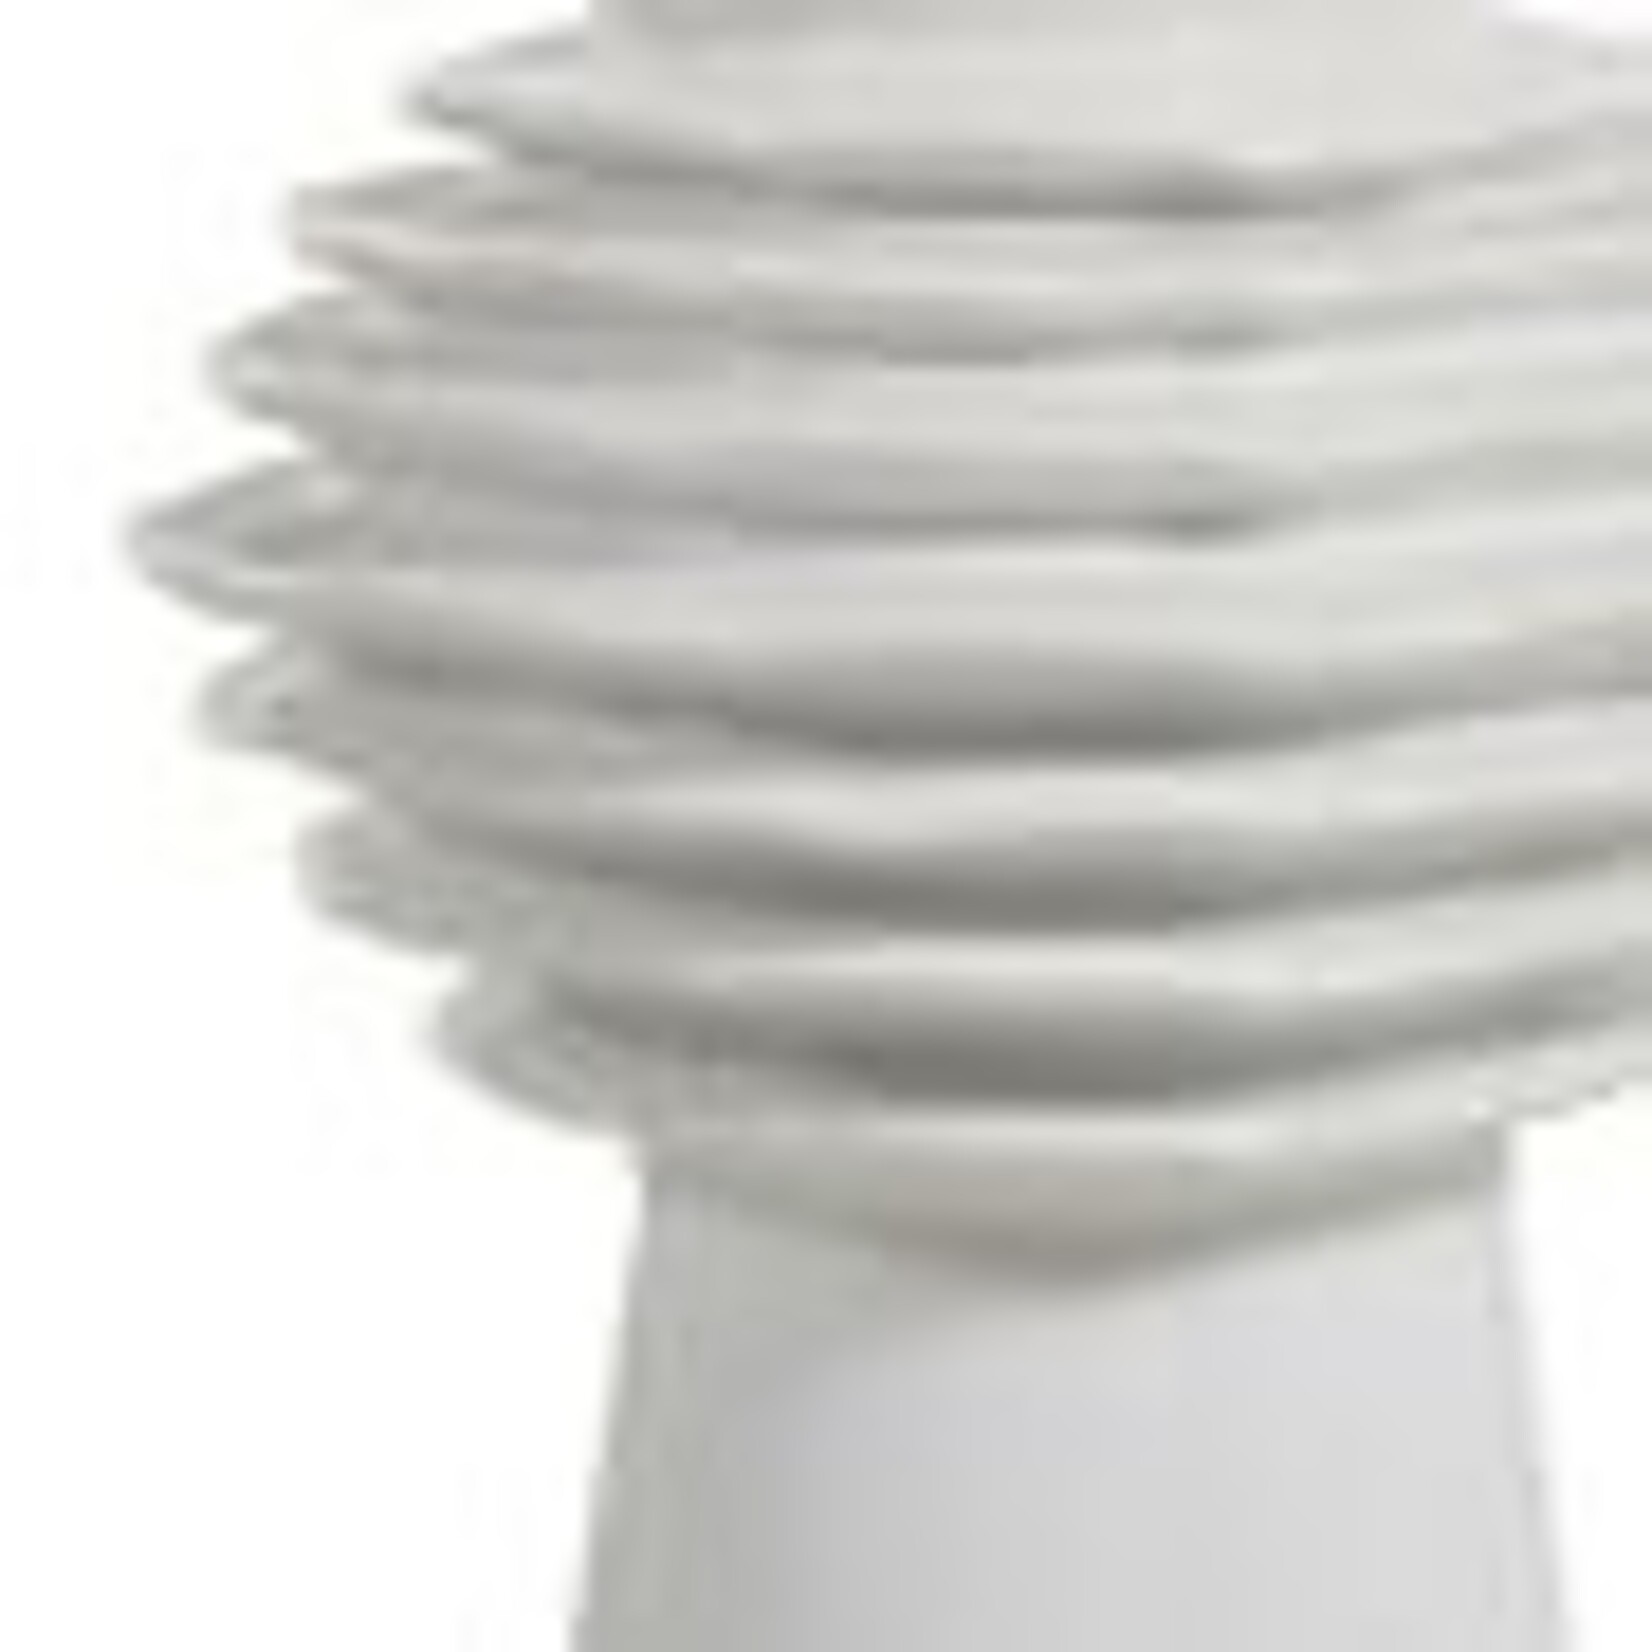 Website Adelaide Table Lamp